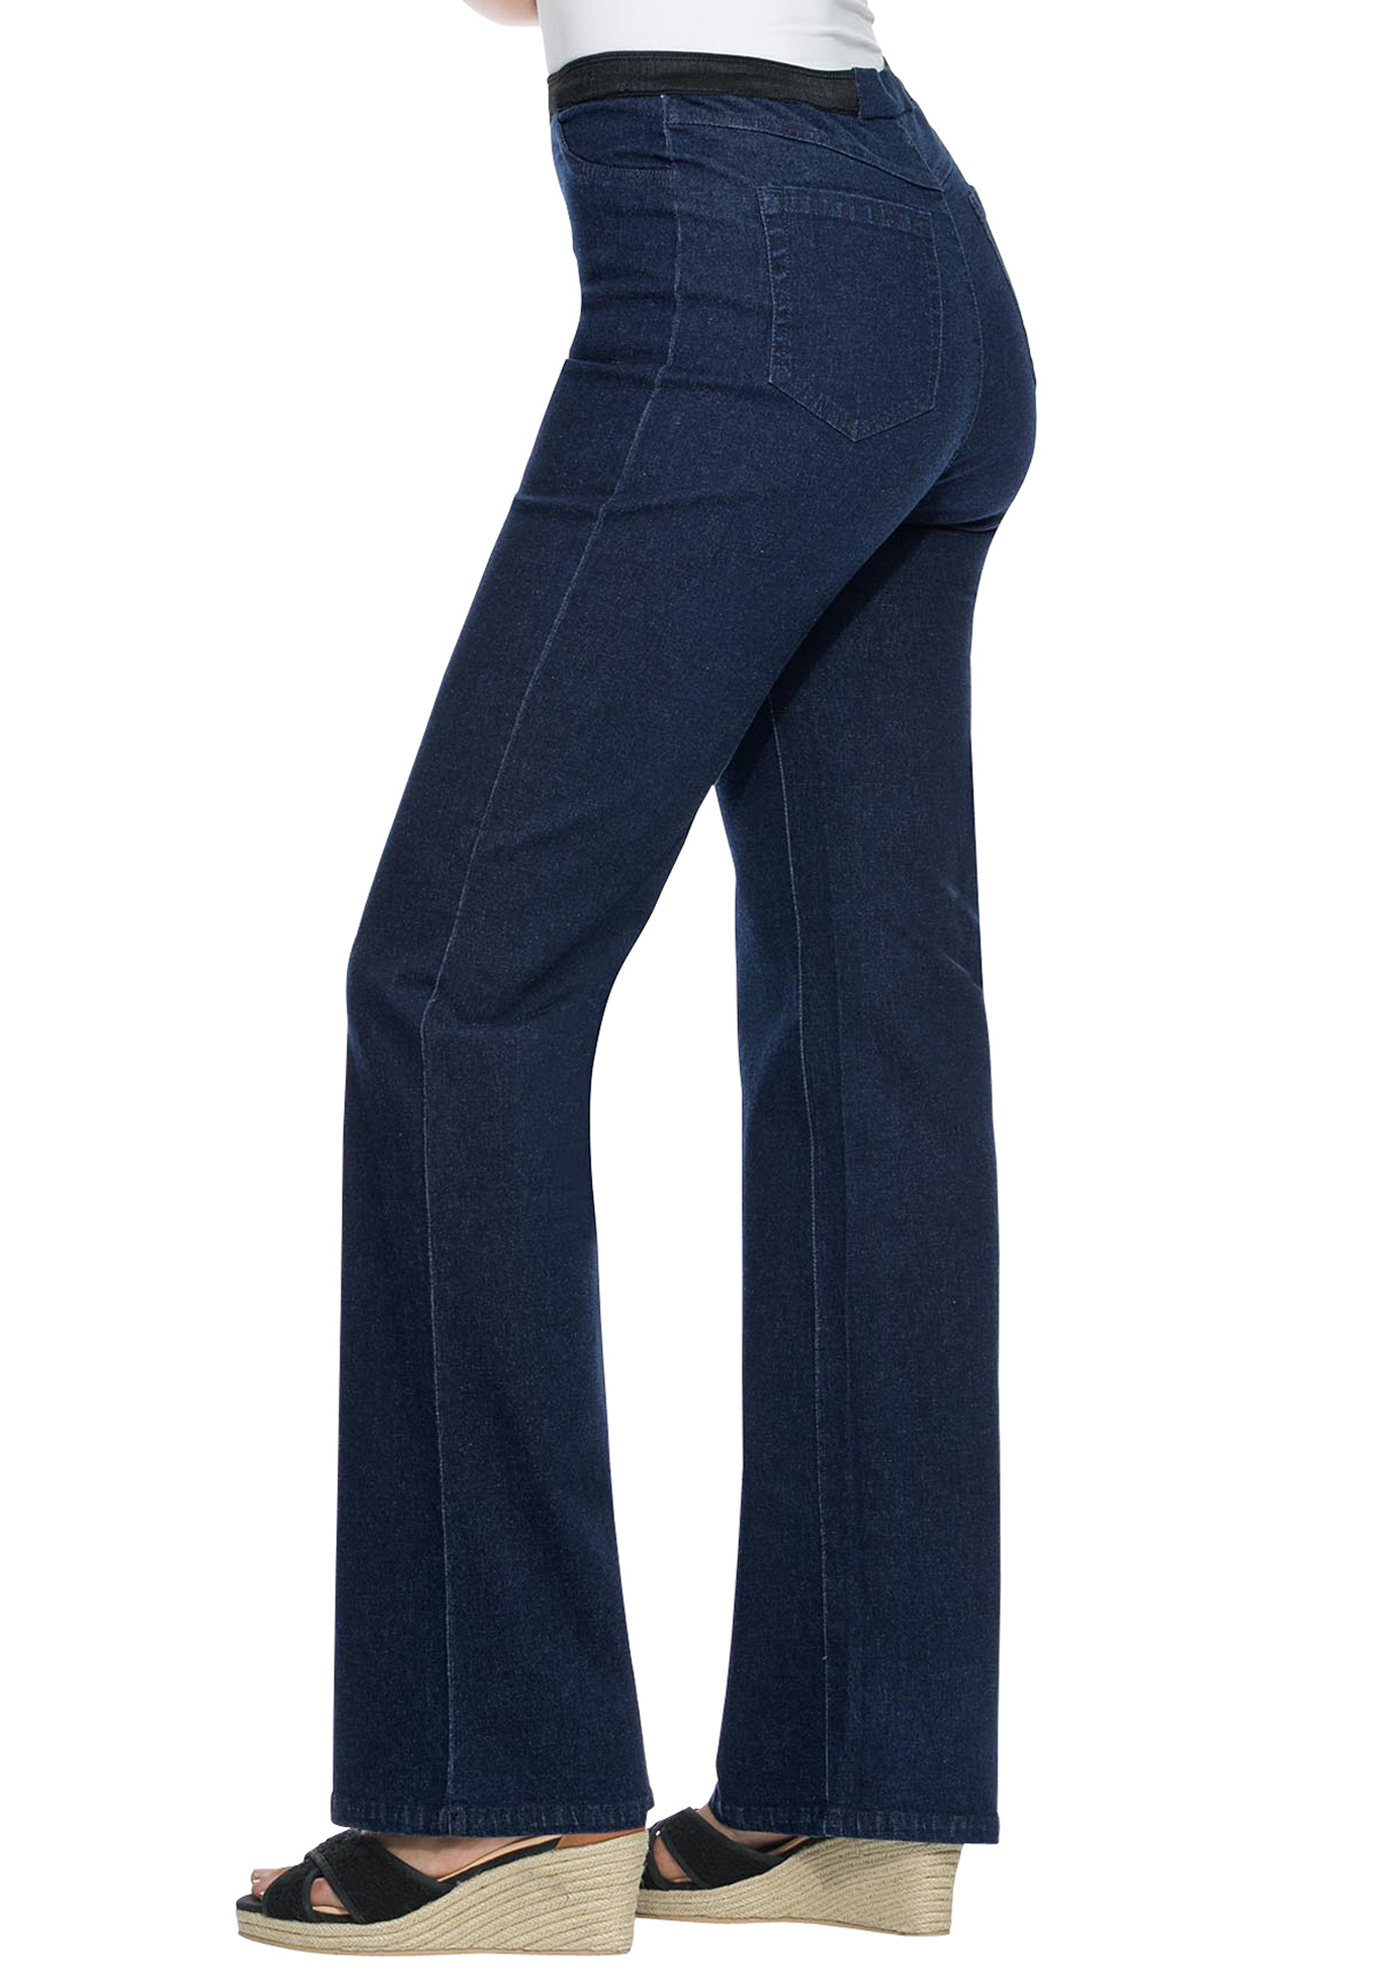 Jessica London Women's Plus Size Bootcut Stretch Jeans Elastic Waist - 16, Indigo Blue - image 5 of 6